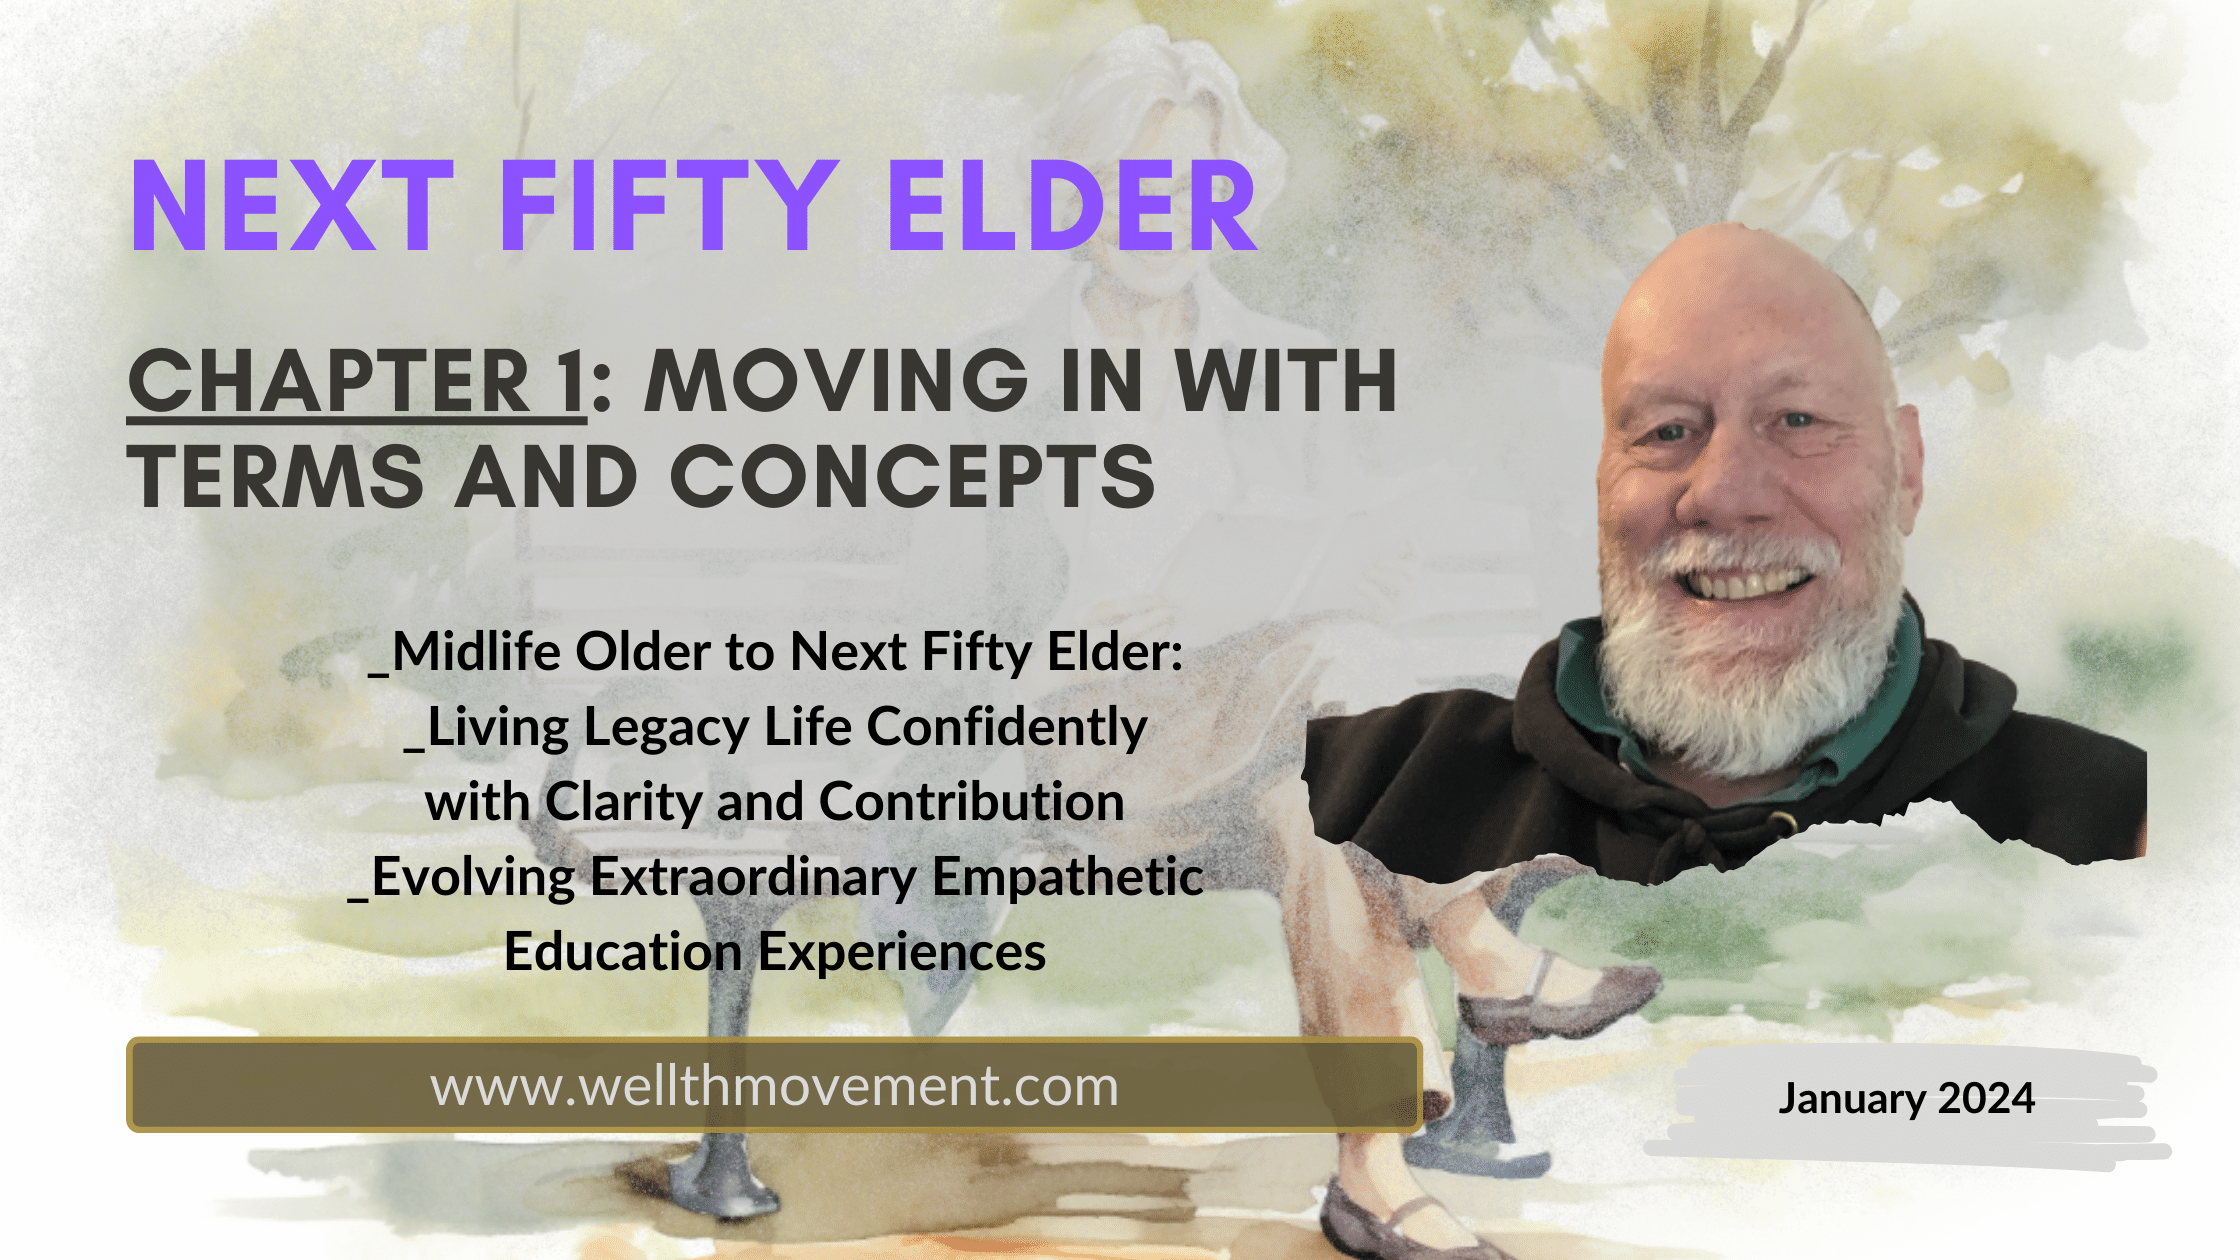 Chapter 1 Next Fifty Elder